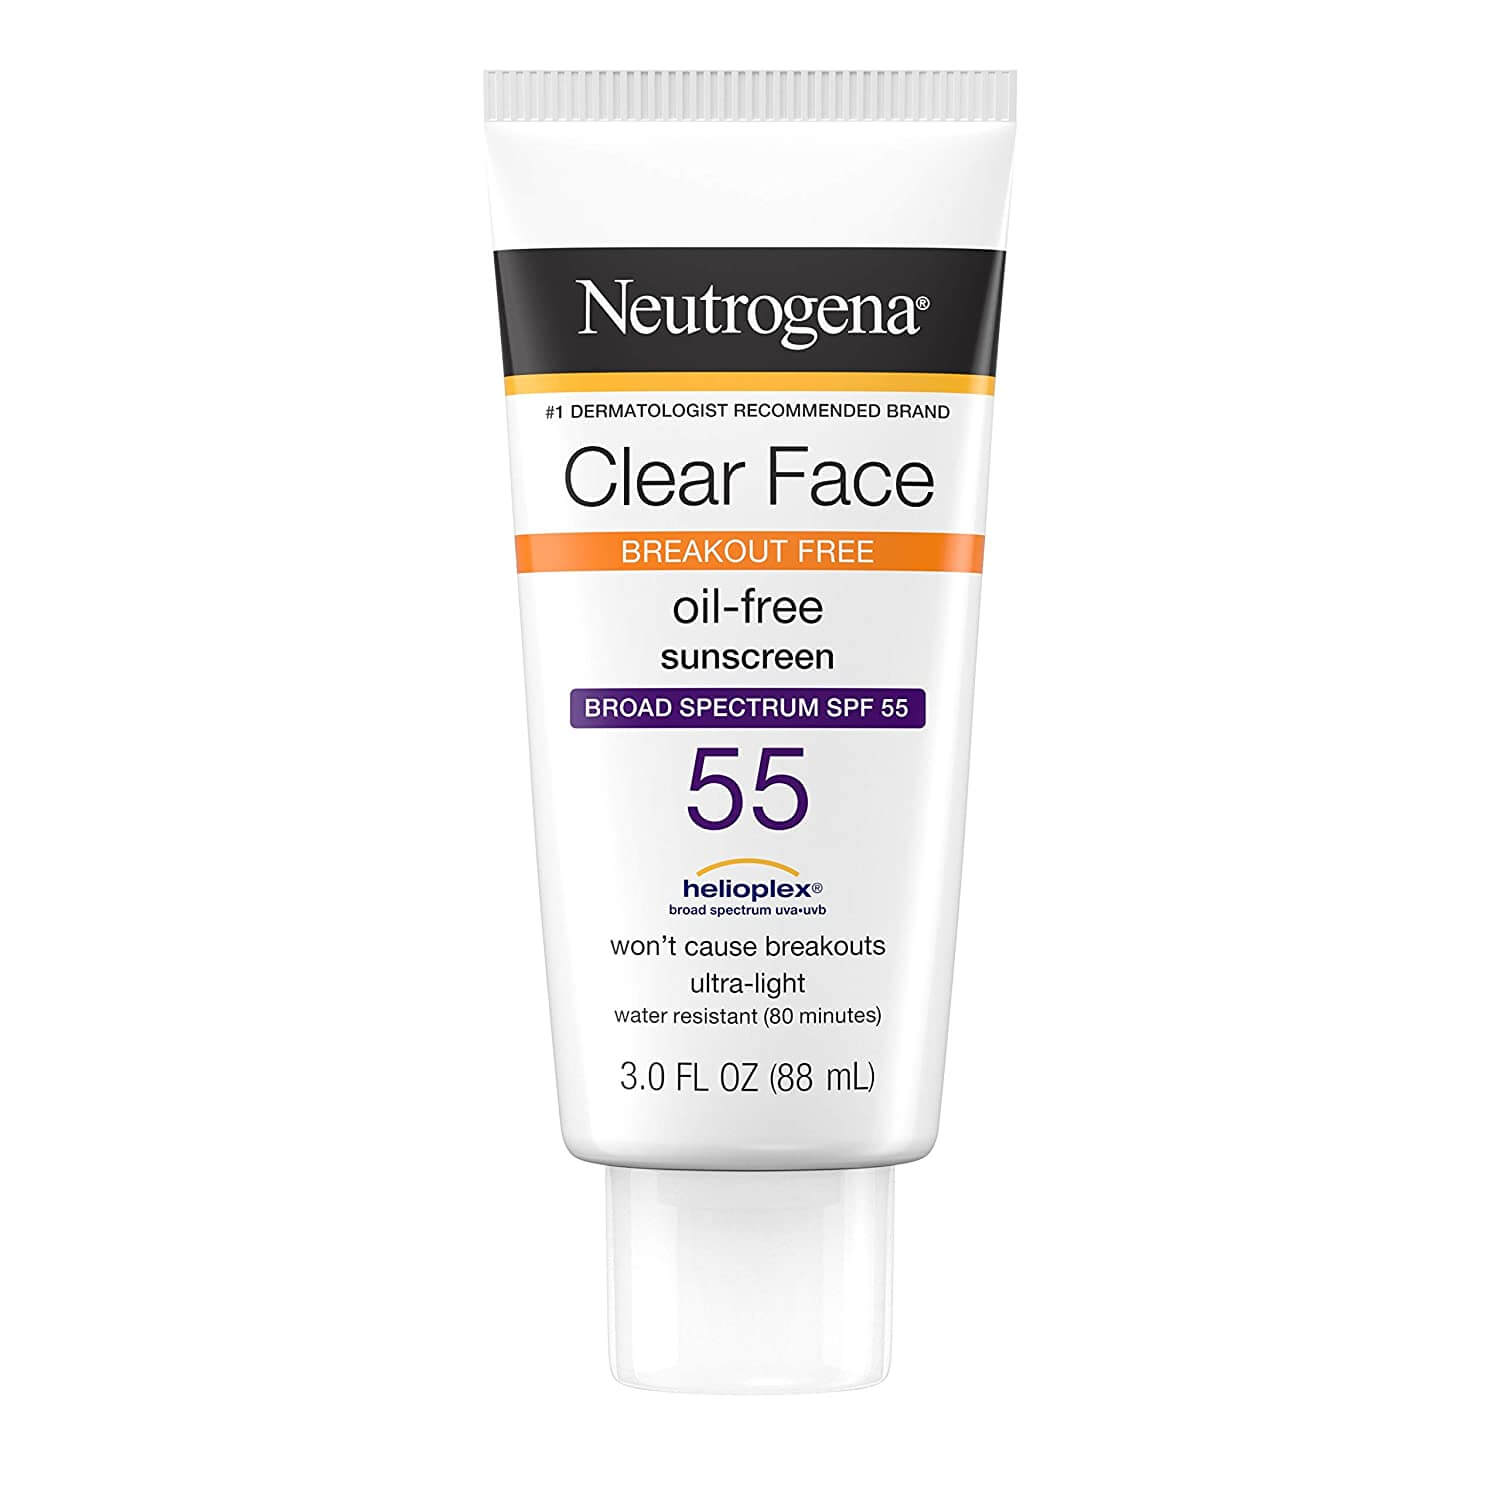 neutrogena clear face sunscreen lotion spf 55 oil-free